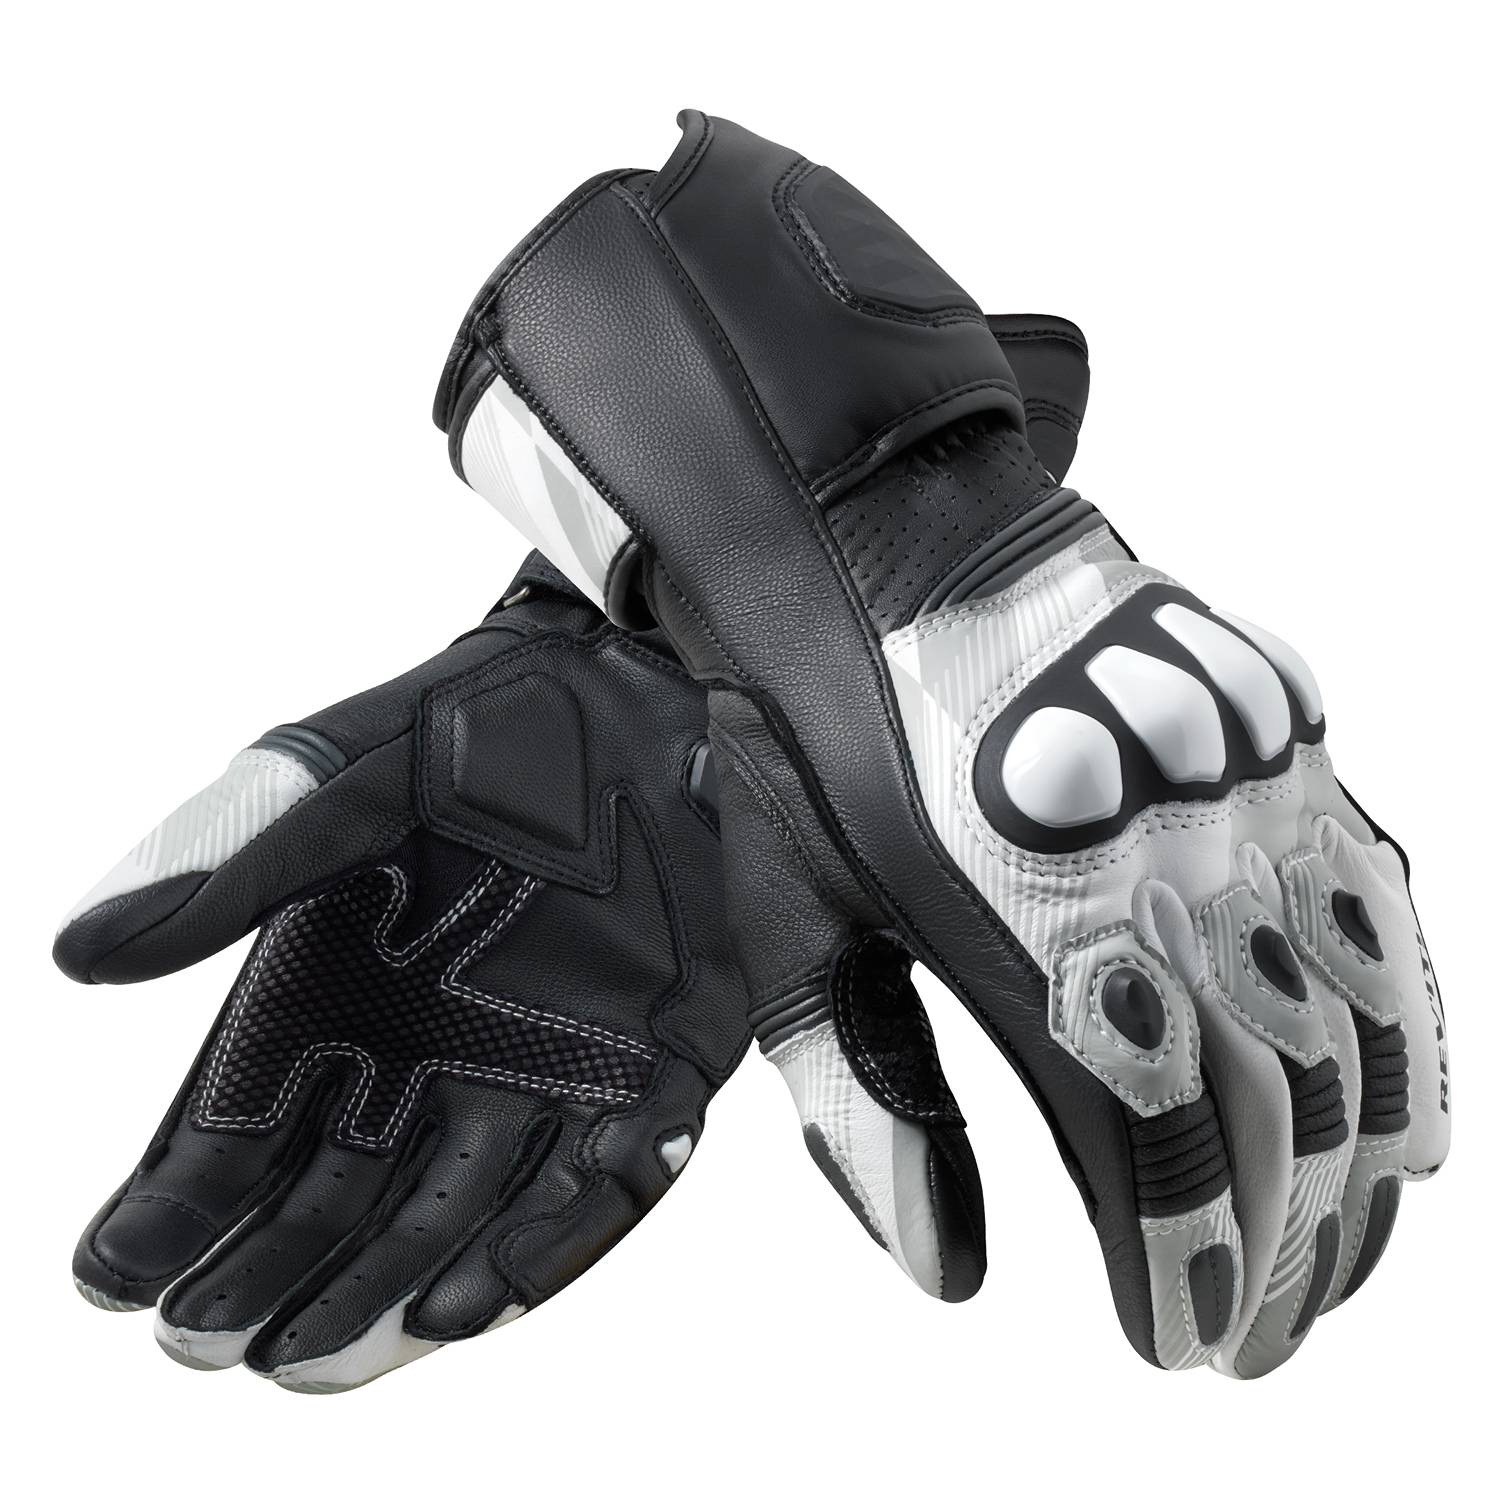 Image of REV'IT! League 2 Gloves Black Grey Size M ID 8700001360678